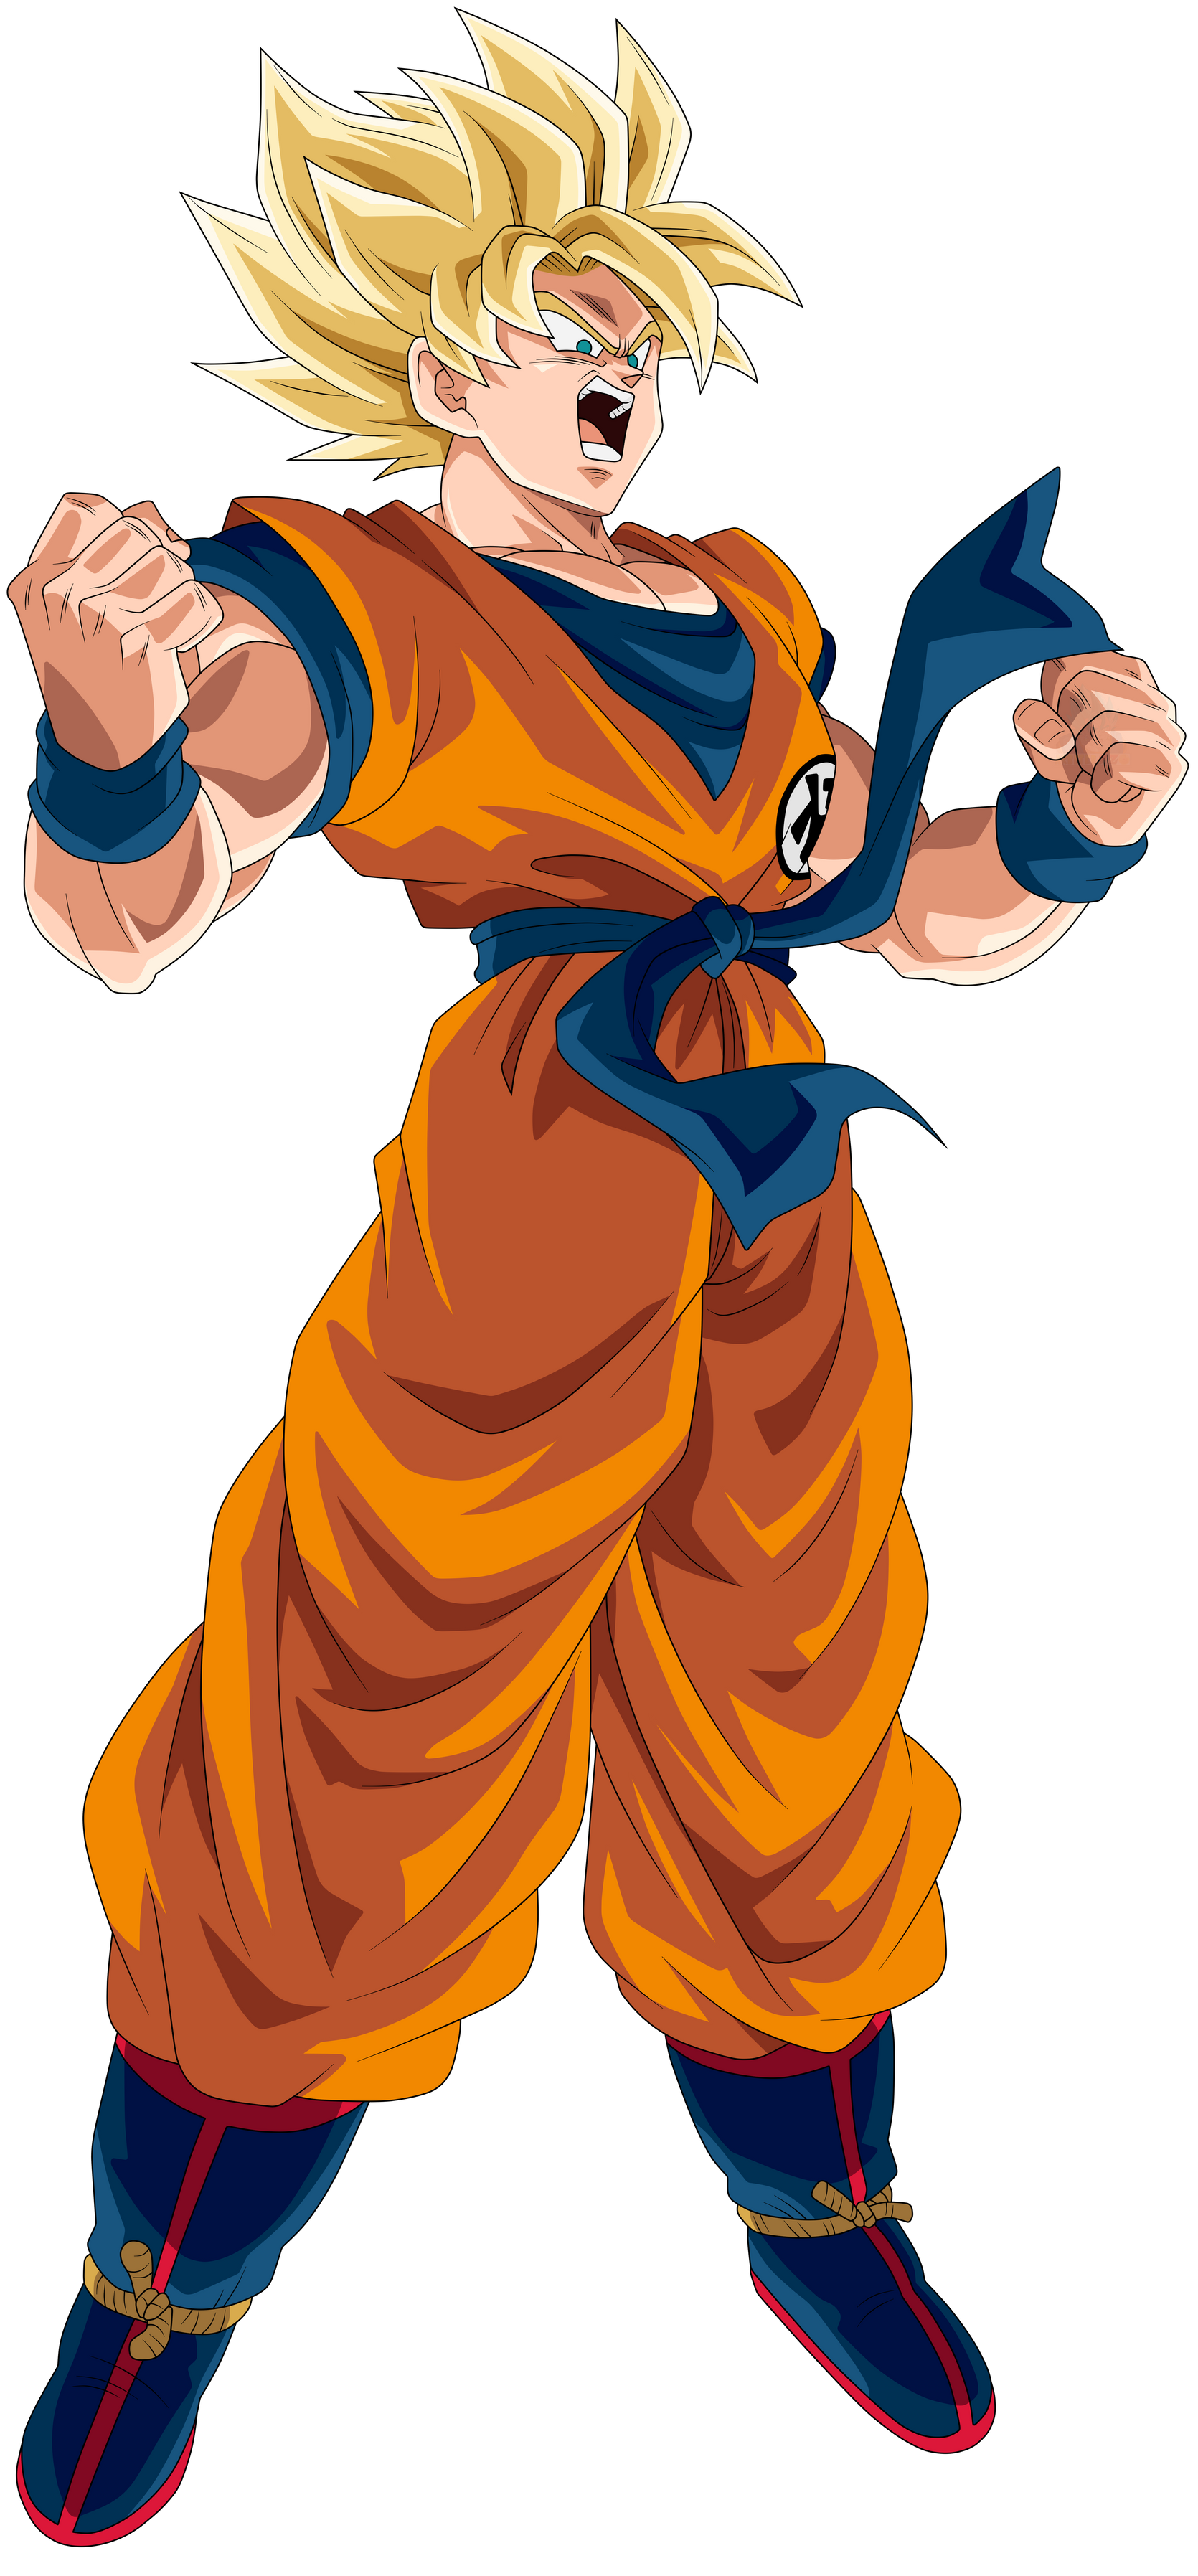 Goku Super Saiyan God by Arbiter720 on DeviantArt